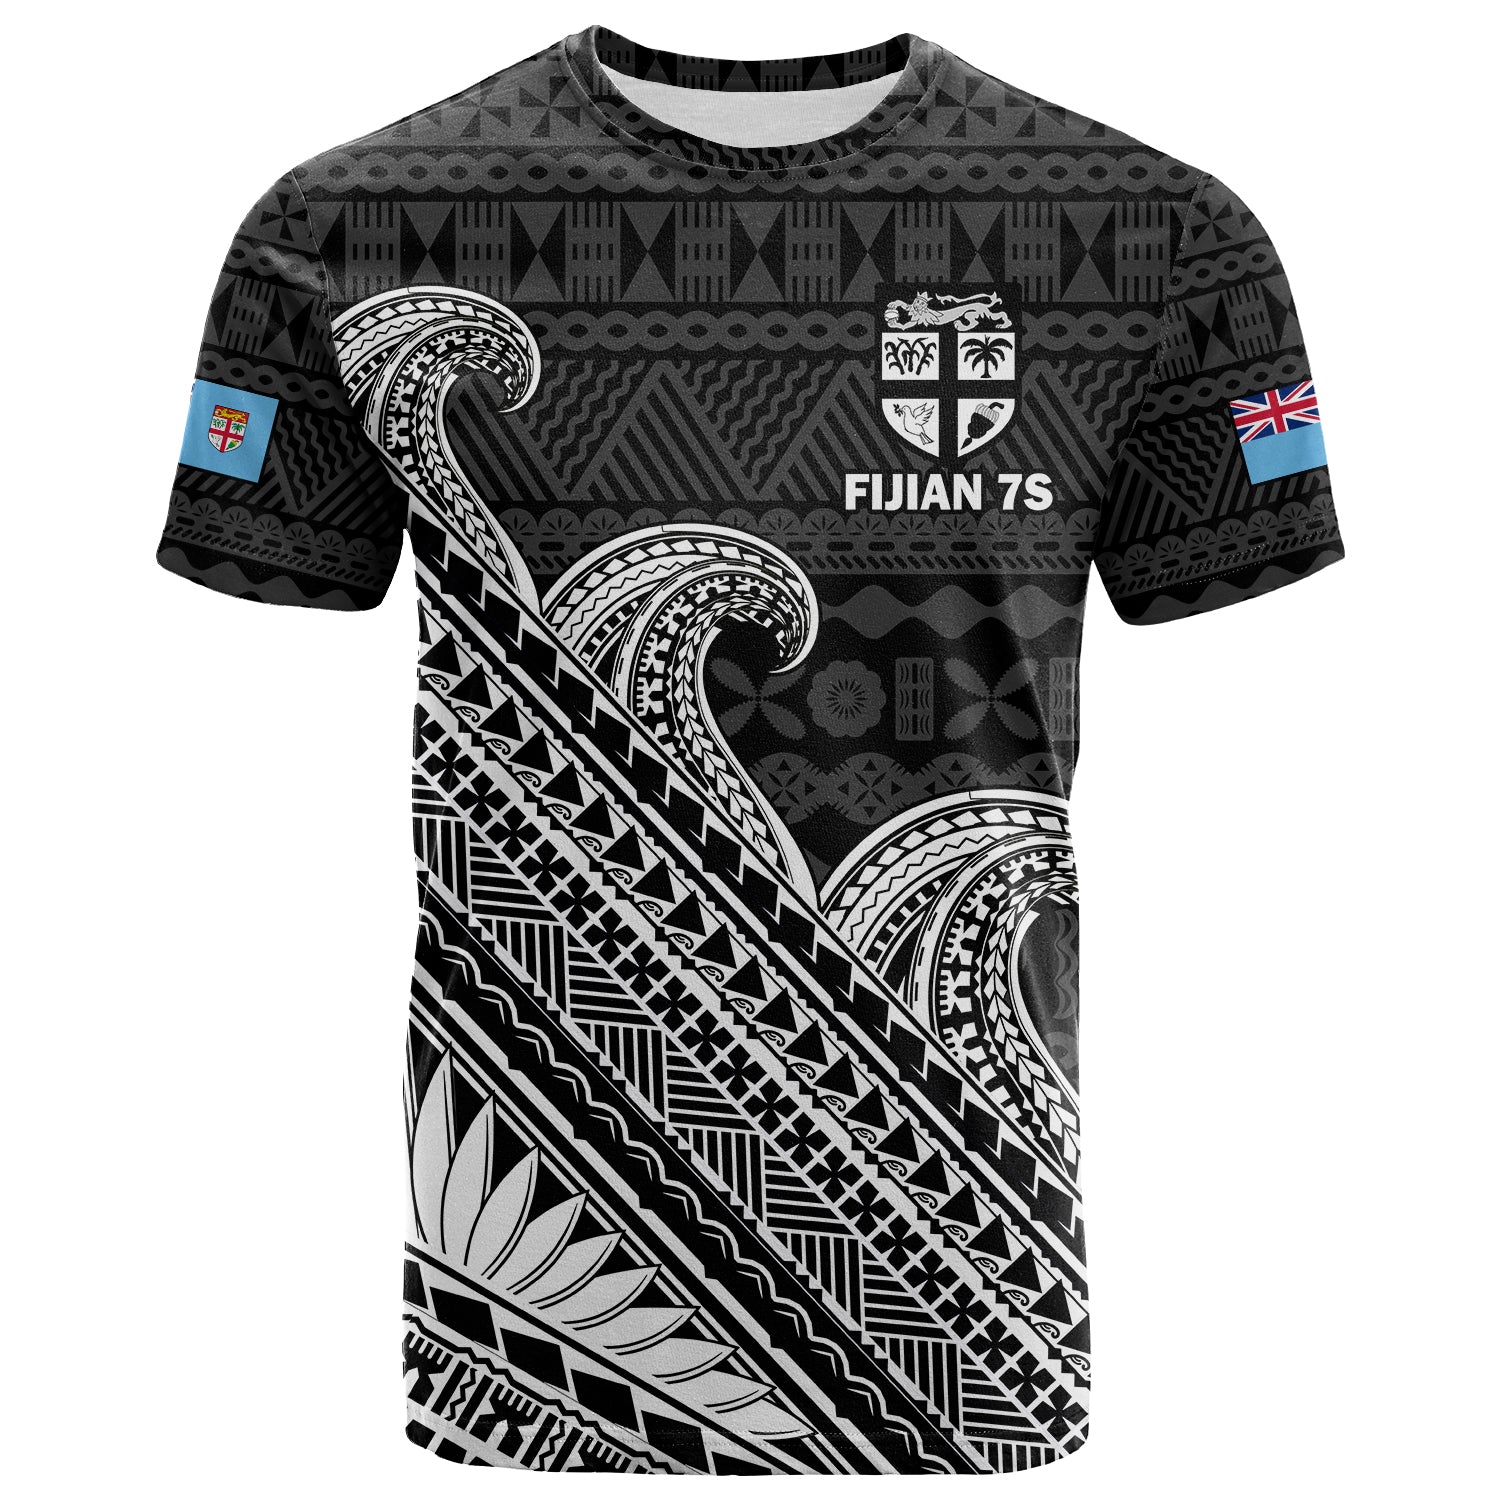 (Custom Text and Number) Fiji Sevens Rugby Fijian 7s Black Tapa Polynesian Art T Shirt LT14 Black - Polynesian Pride